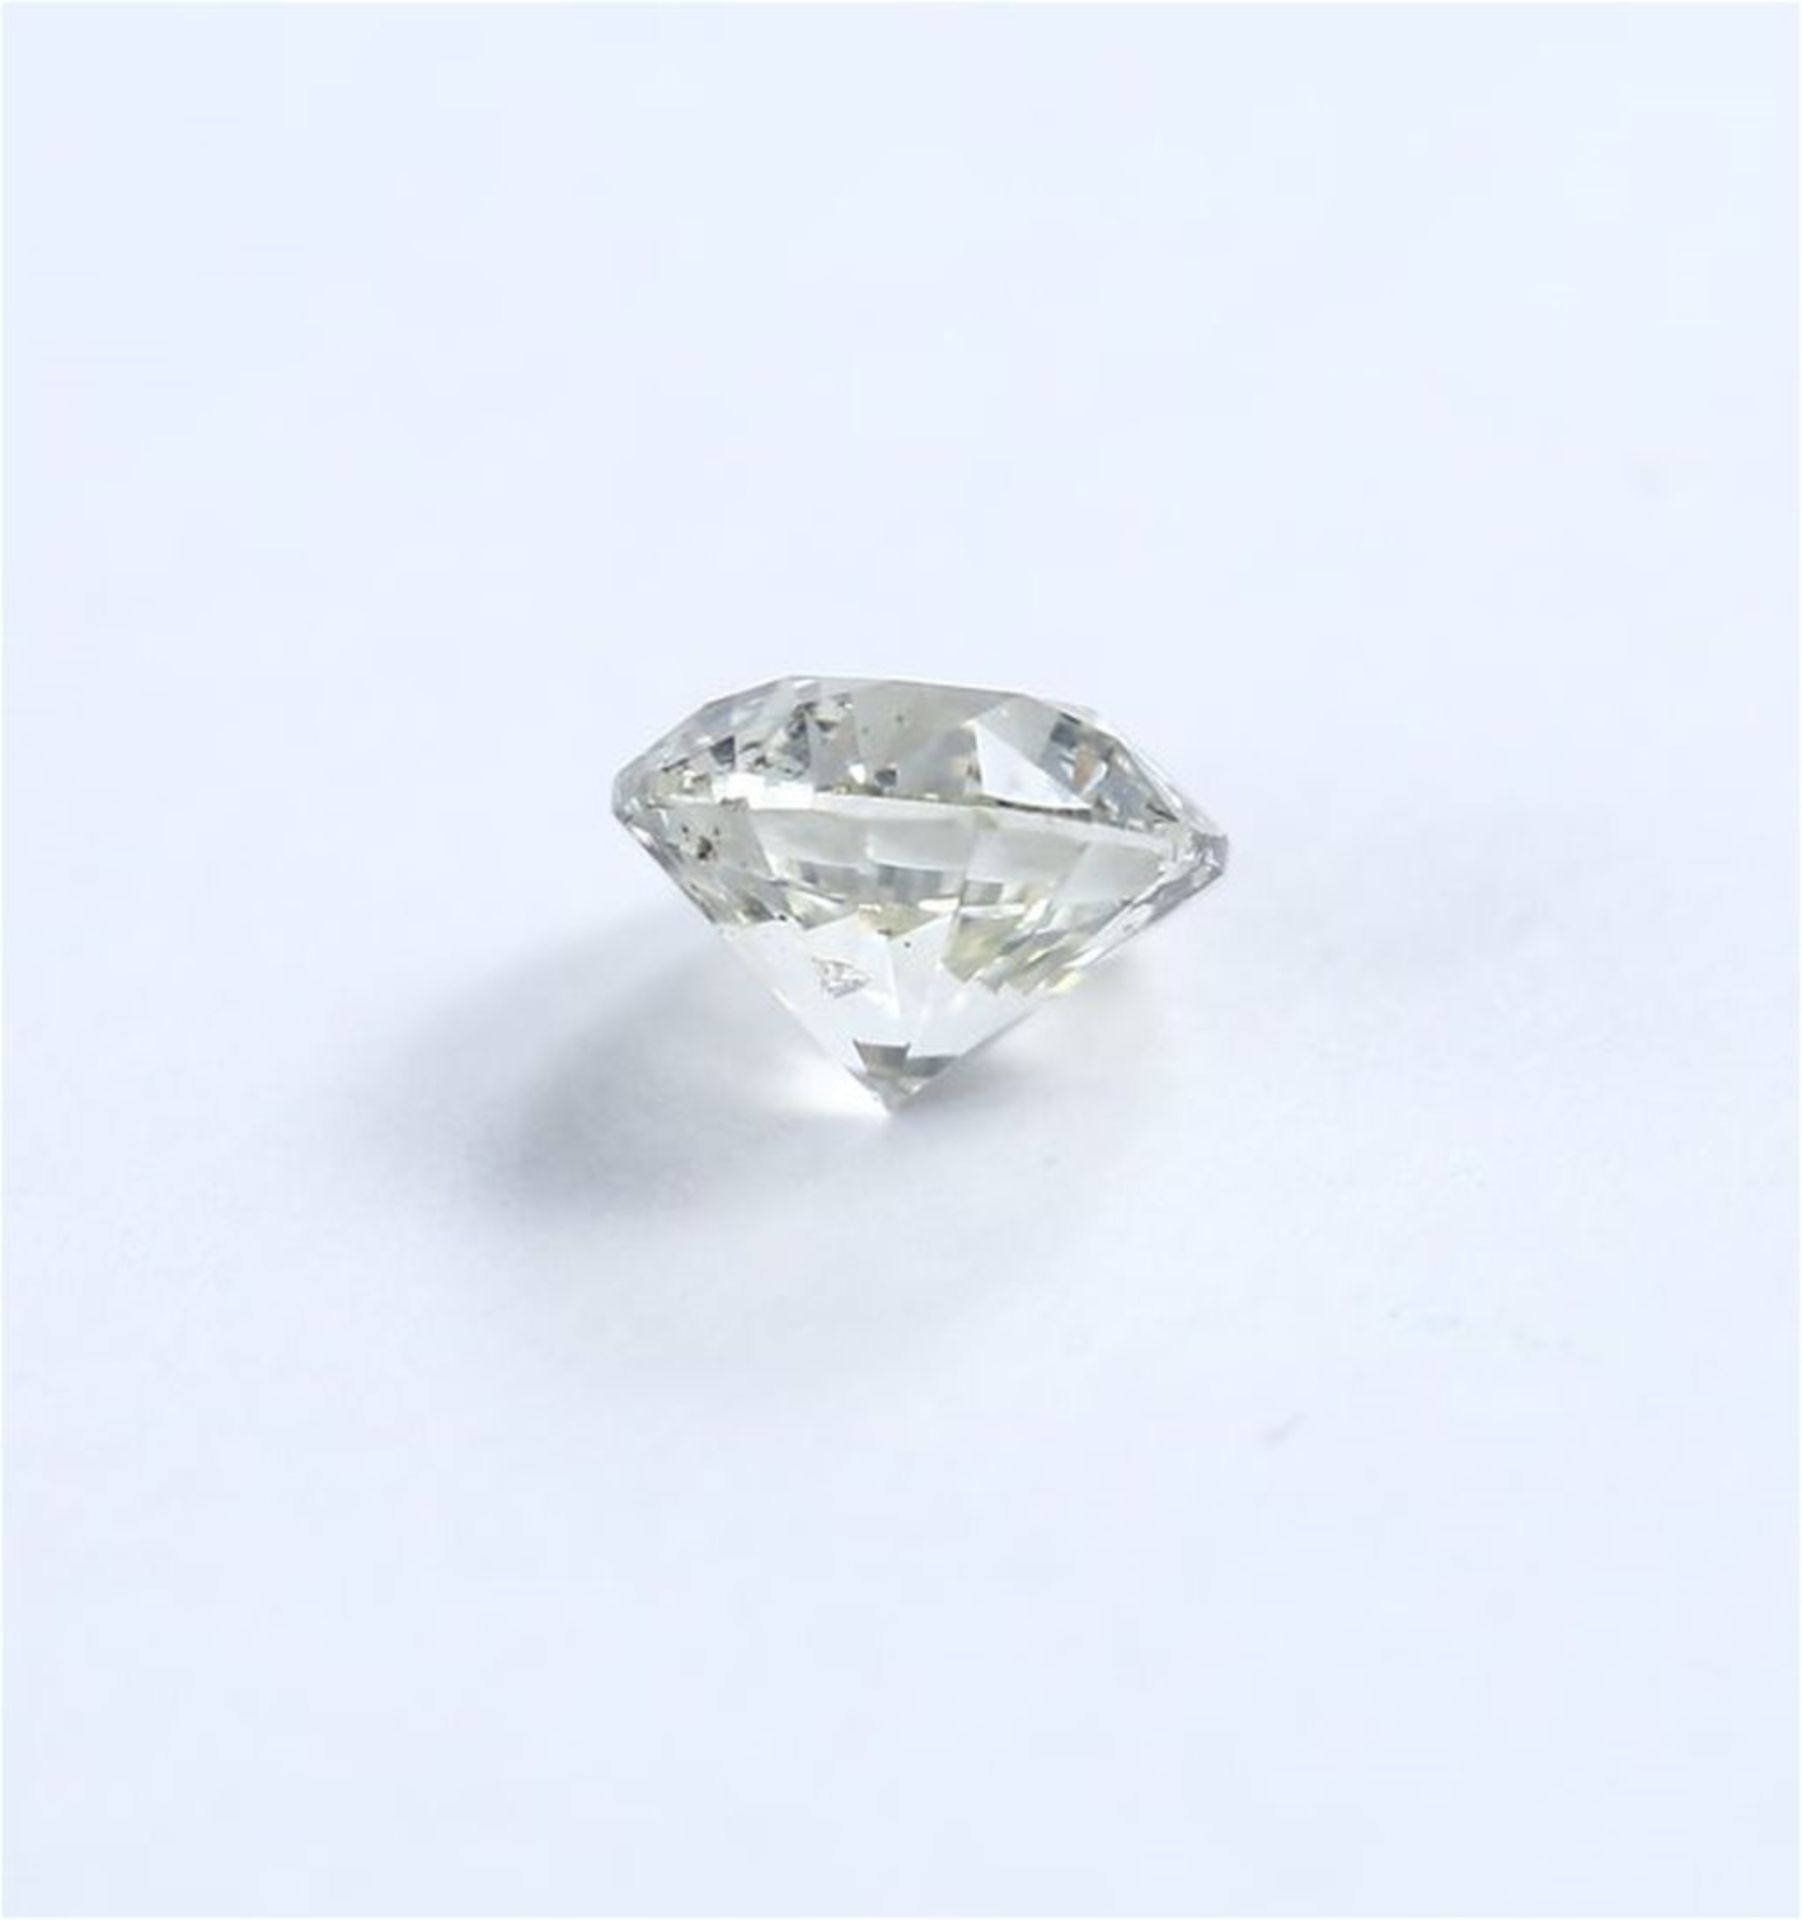 IGI Certified 0.90 ct. Round Brilliant Natural Diamond - Image 4 of 6